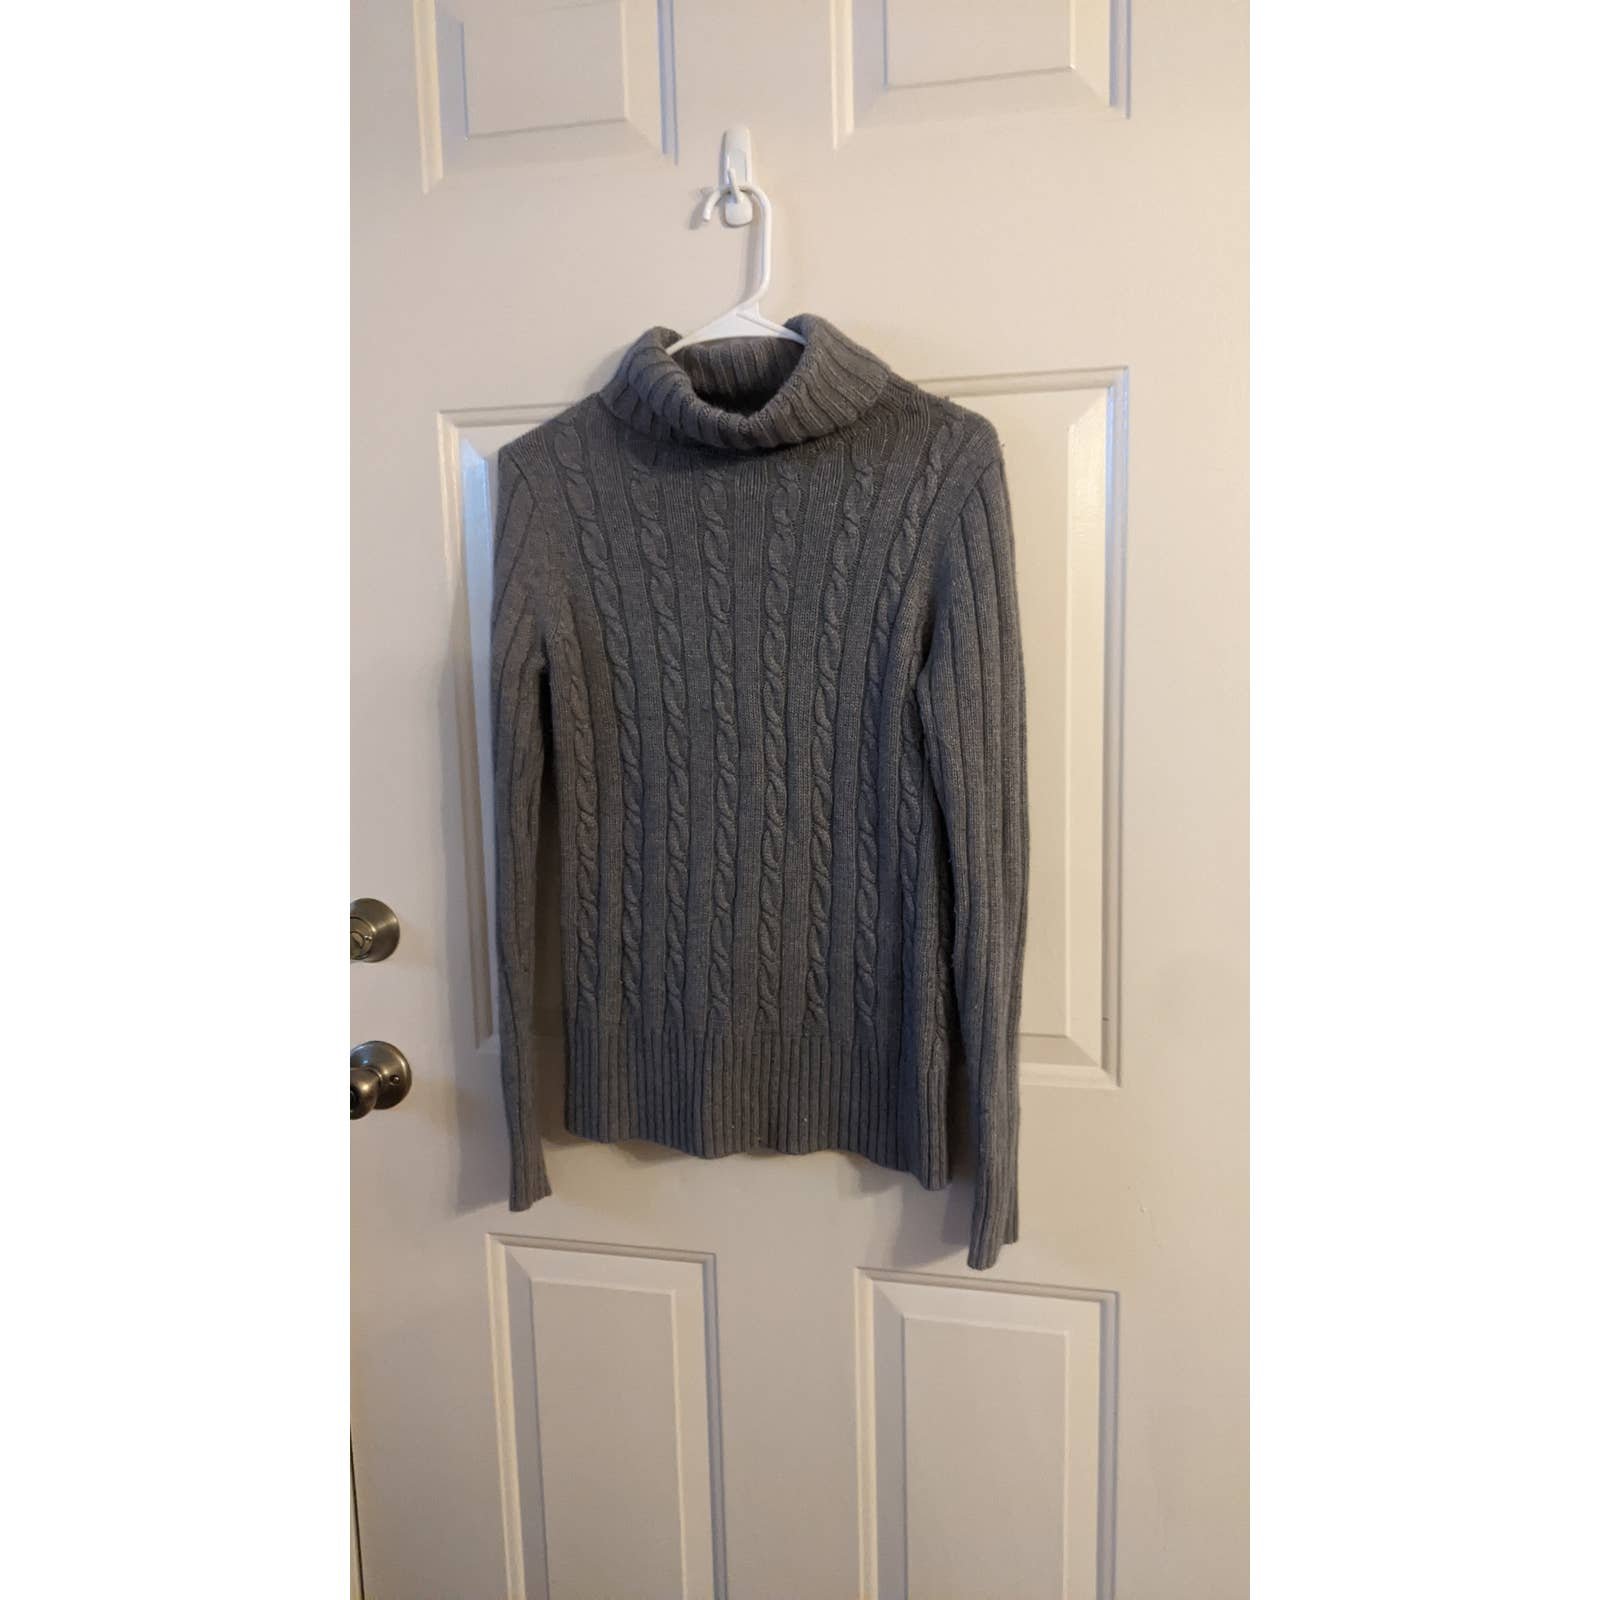 High quality J Crew Cableknit Grey Turtleneck Sweater, 